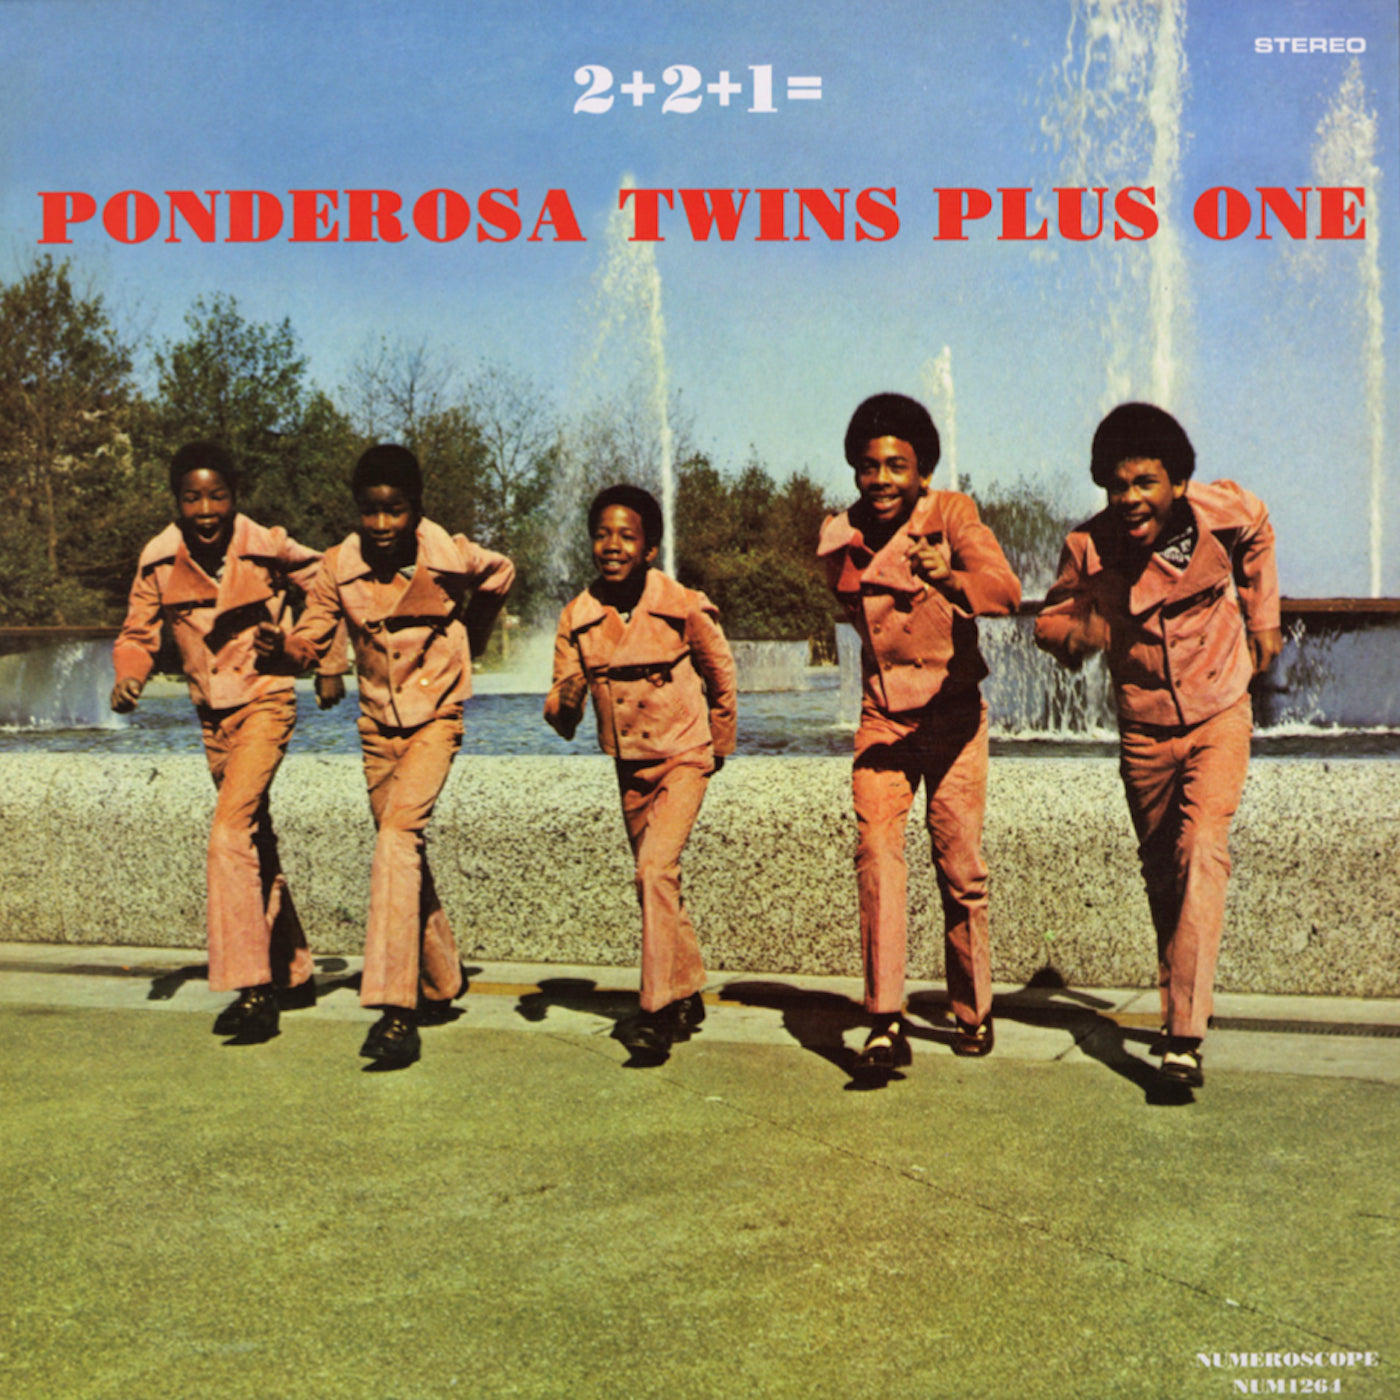 Ponderosa Twins Plus One - Bound b/w I Remember You  [7" Vinyl]